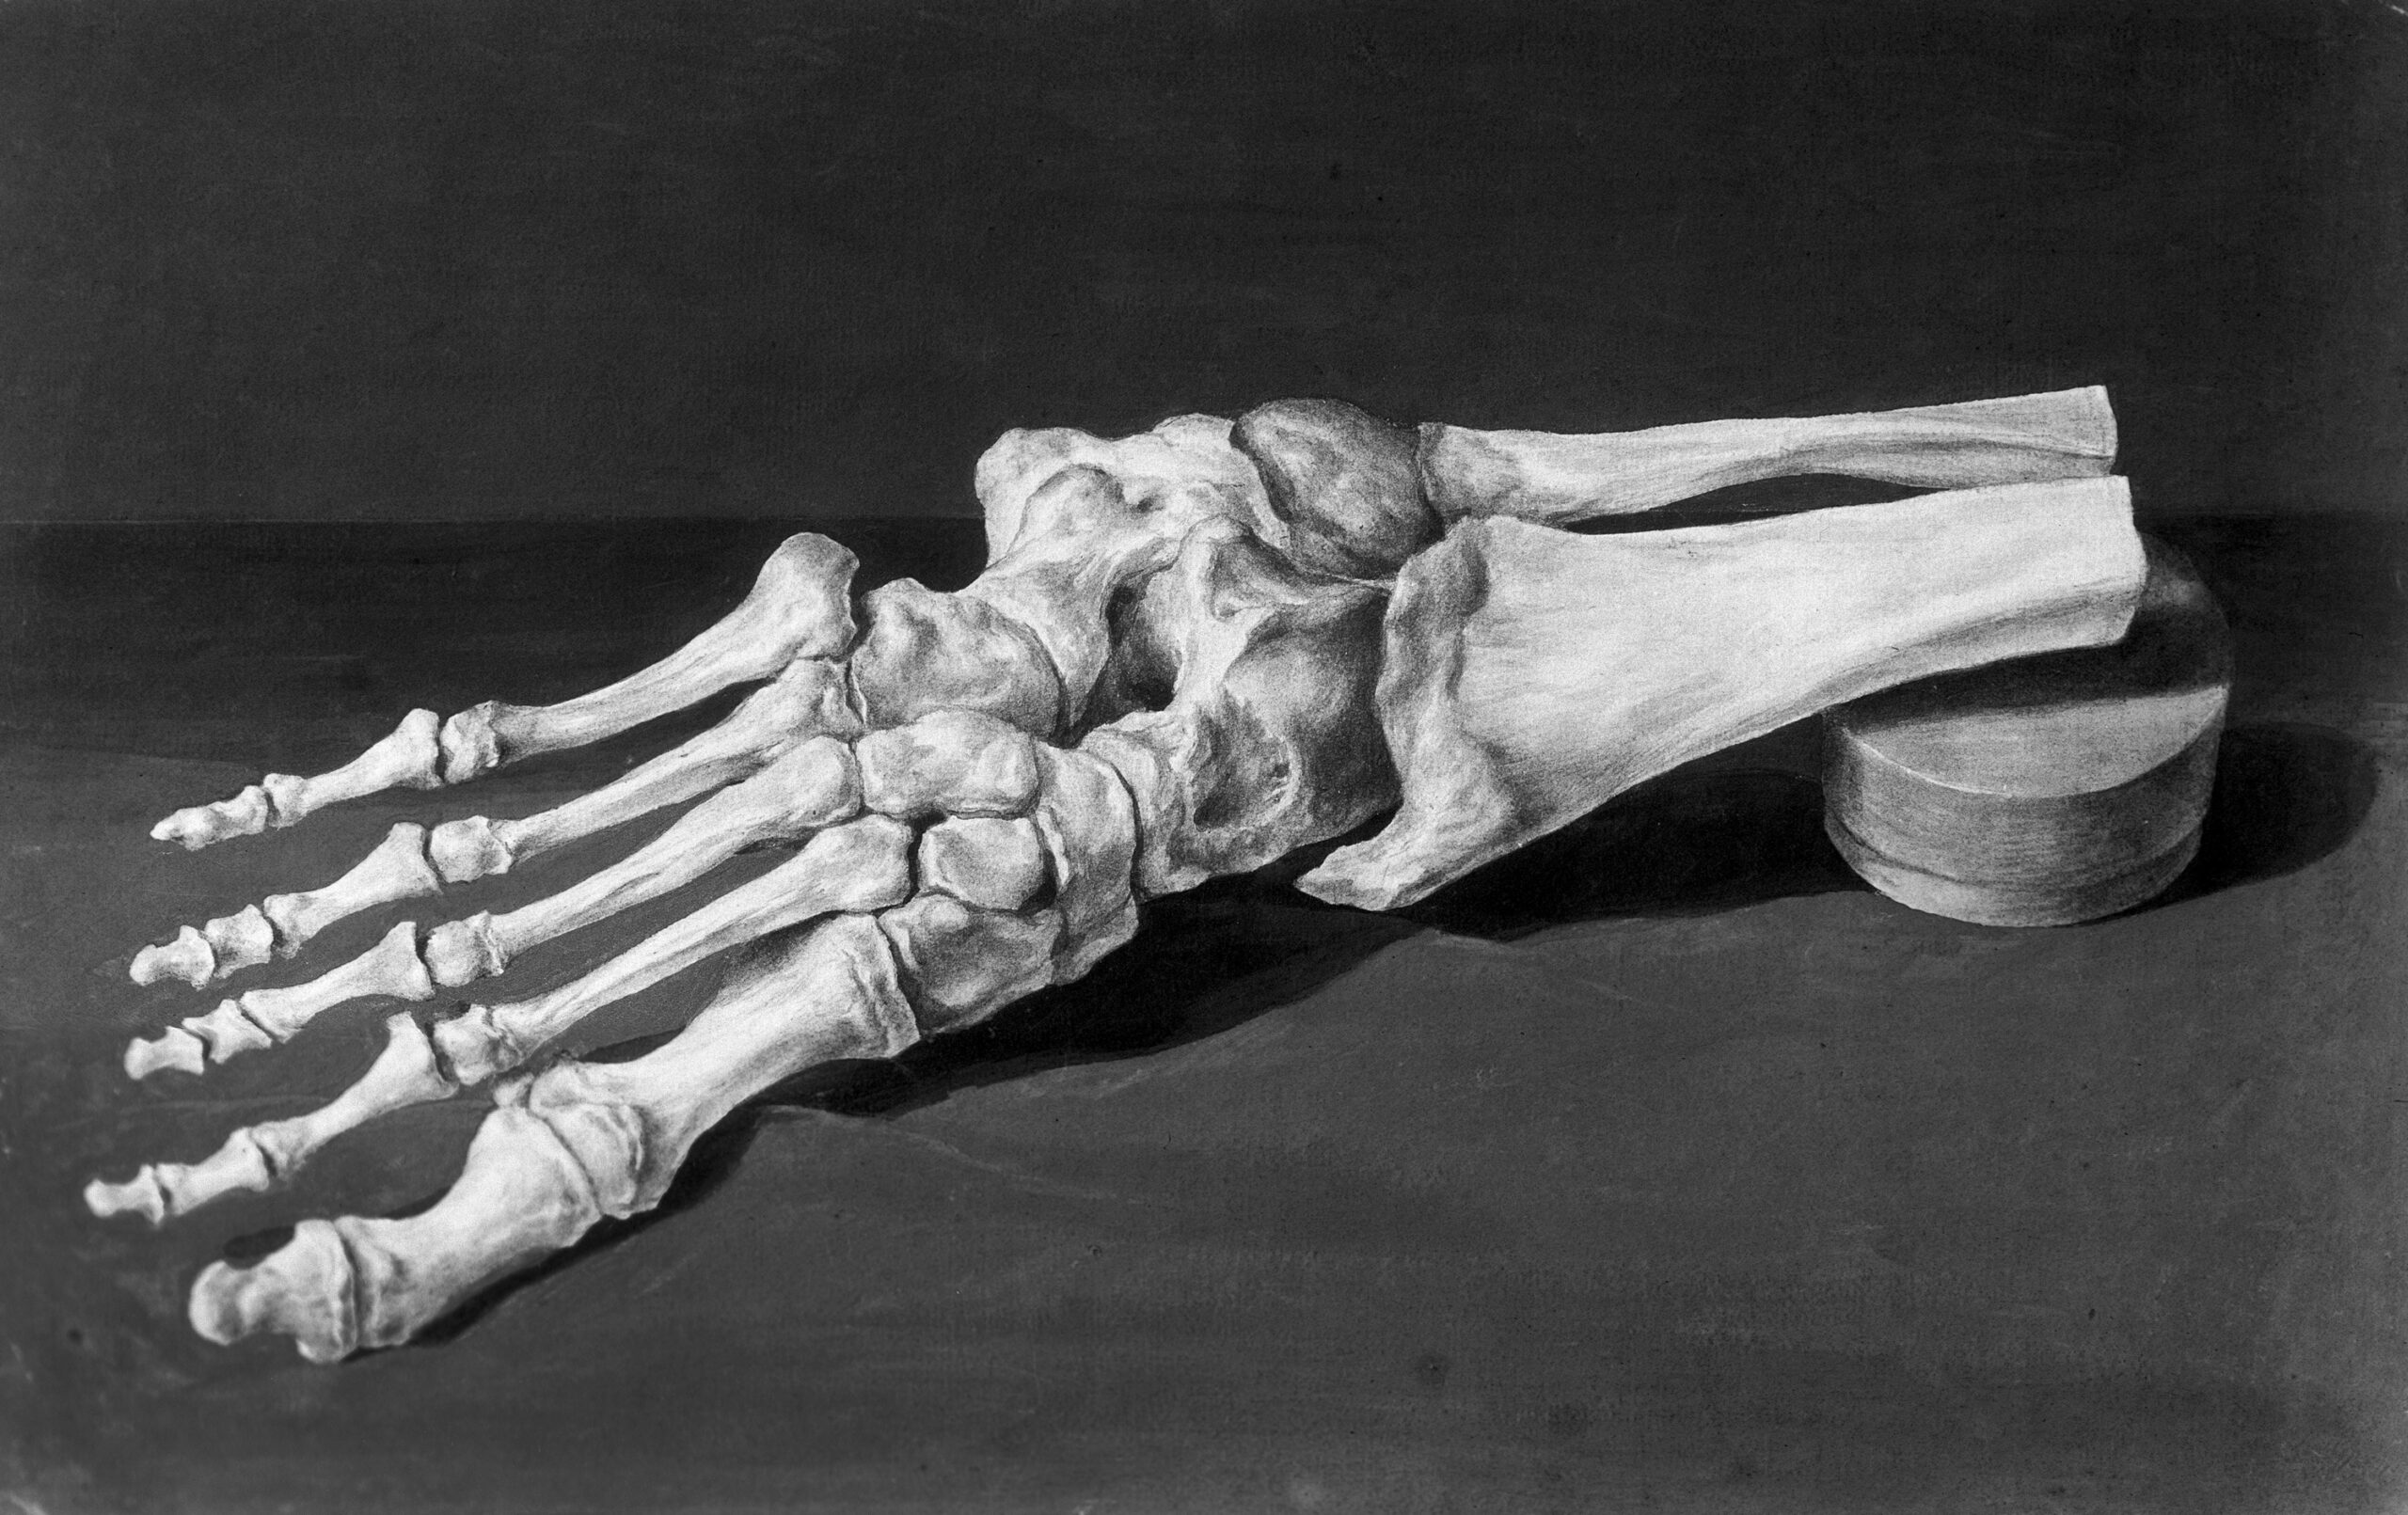 Human feet are terrible, evolutionarily speaking